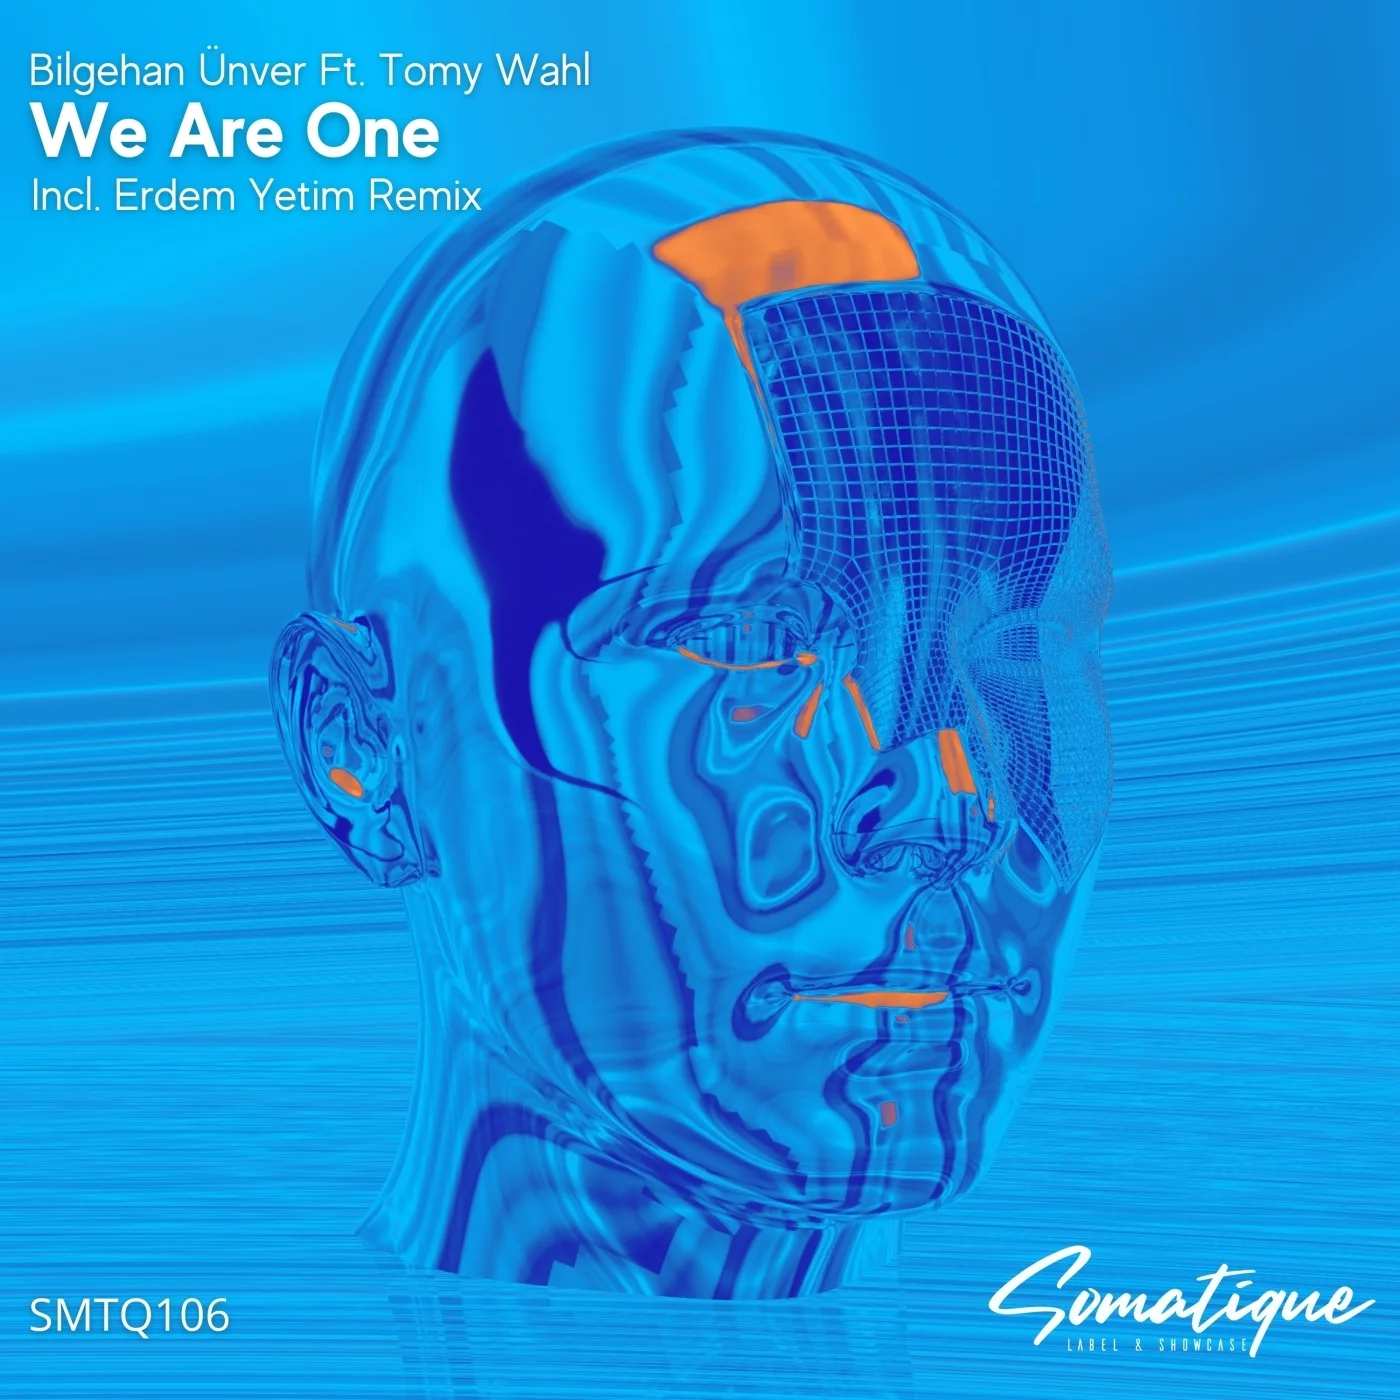 Bilgehan Ünver, Tomy Wahl - We Are One (Erdem Yetim Remix)